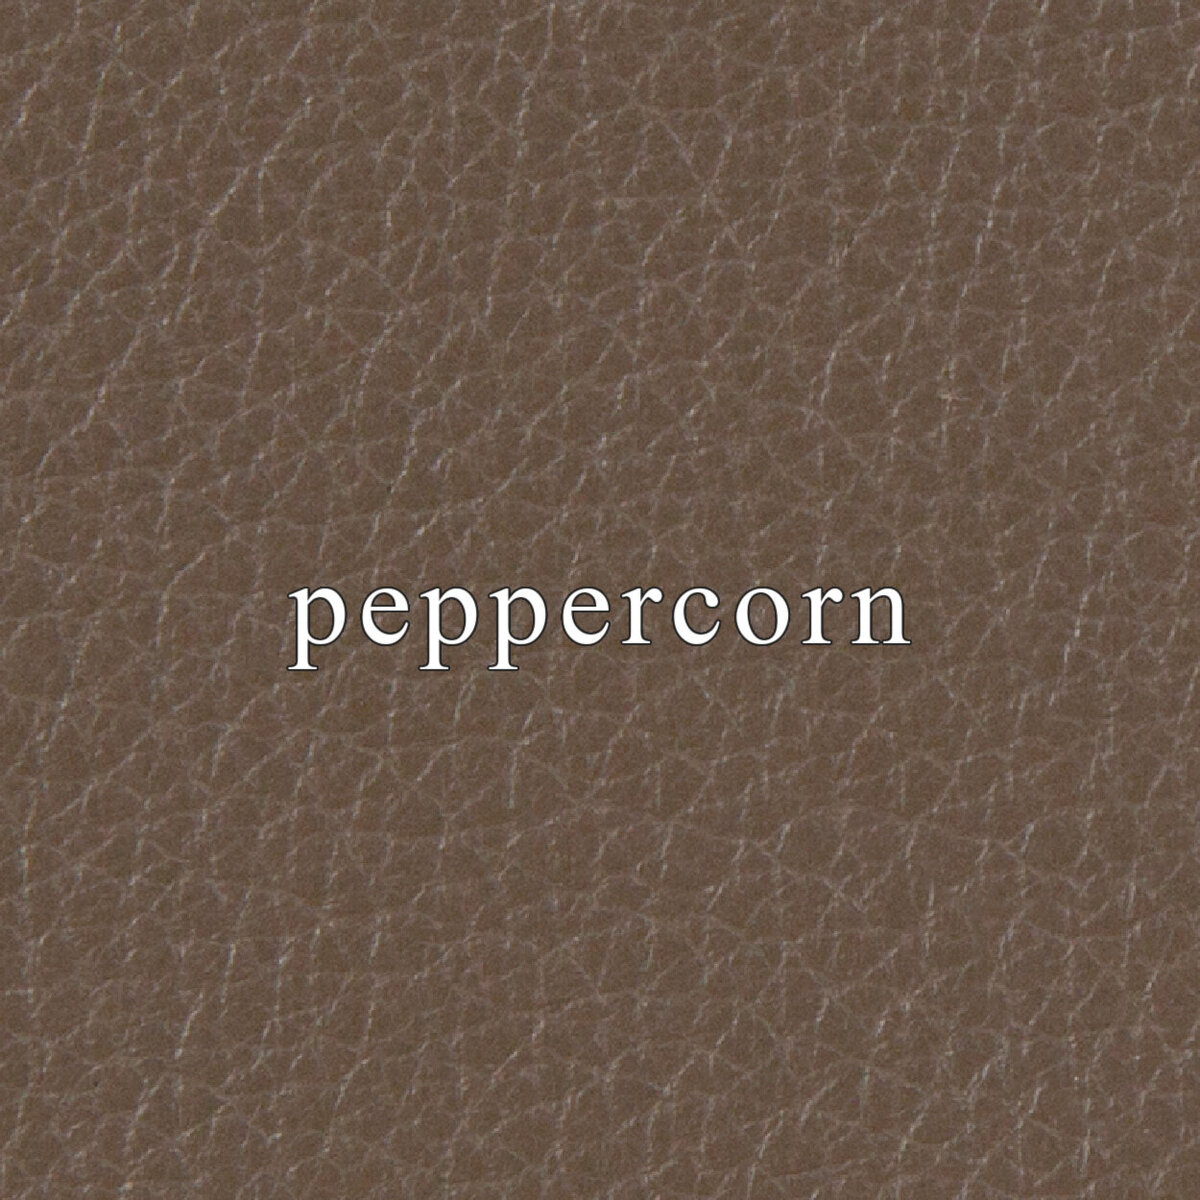 standard-peppercorn